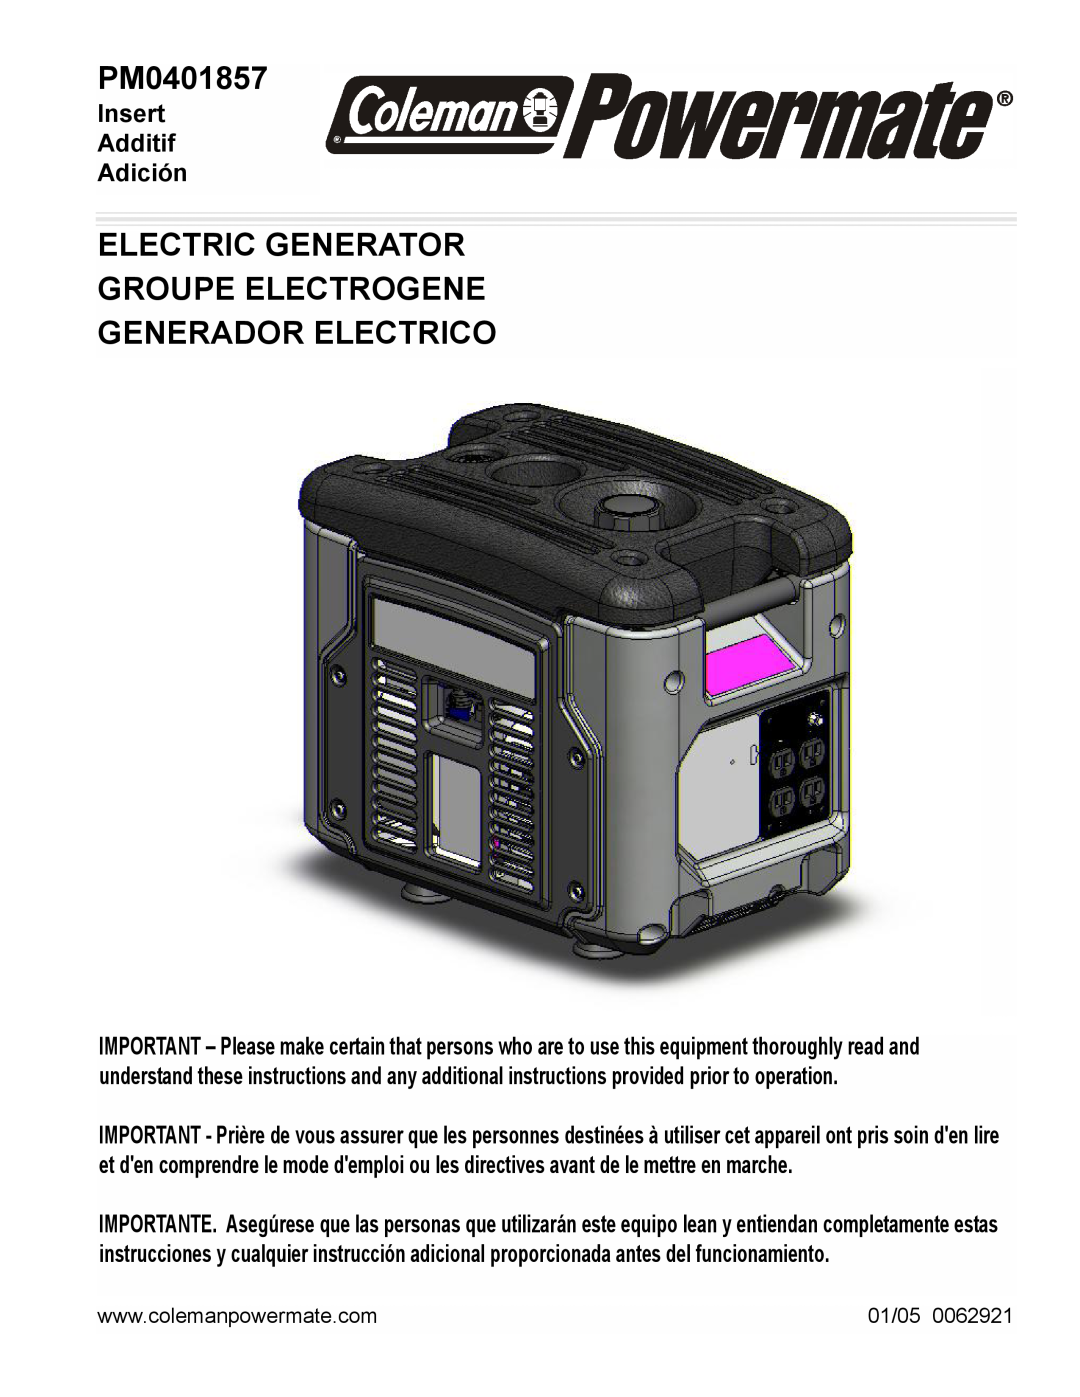 Powermate PM0401857 manual Electric Generator Groupe Electrogene, Generador Electrico, Insert Additif Adición, 01/05 